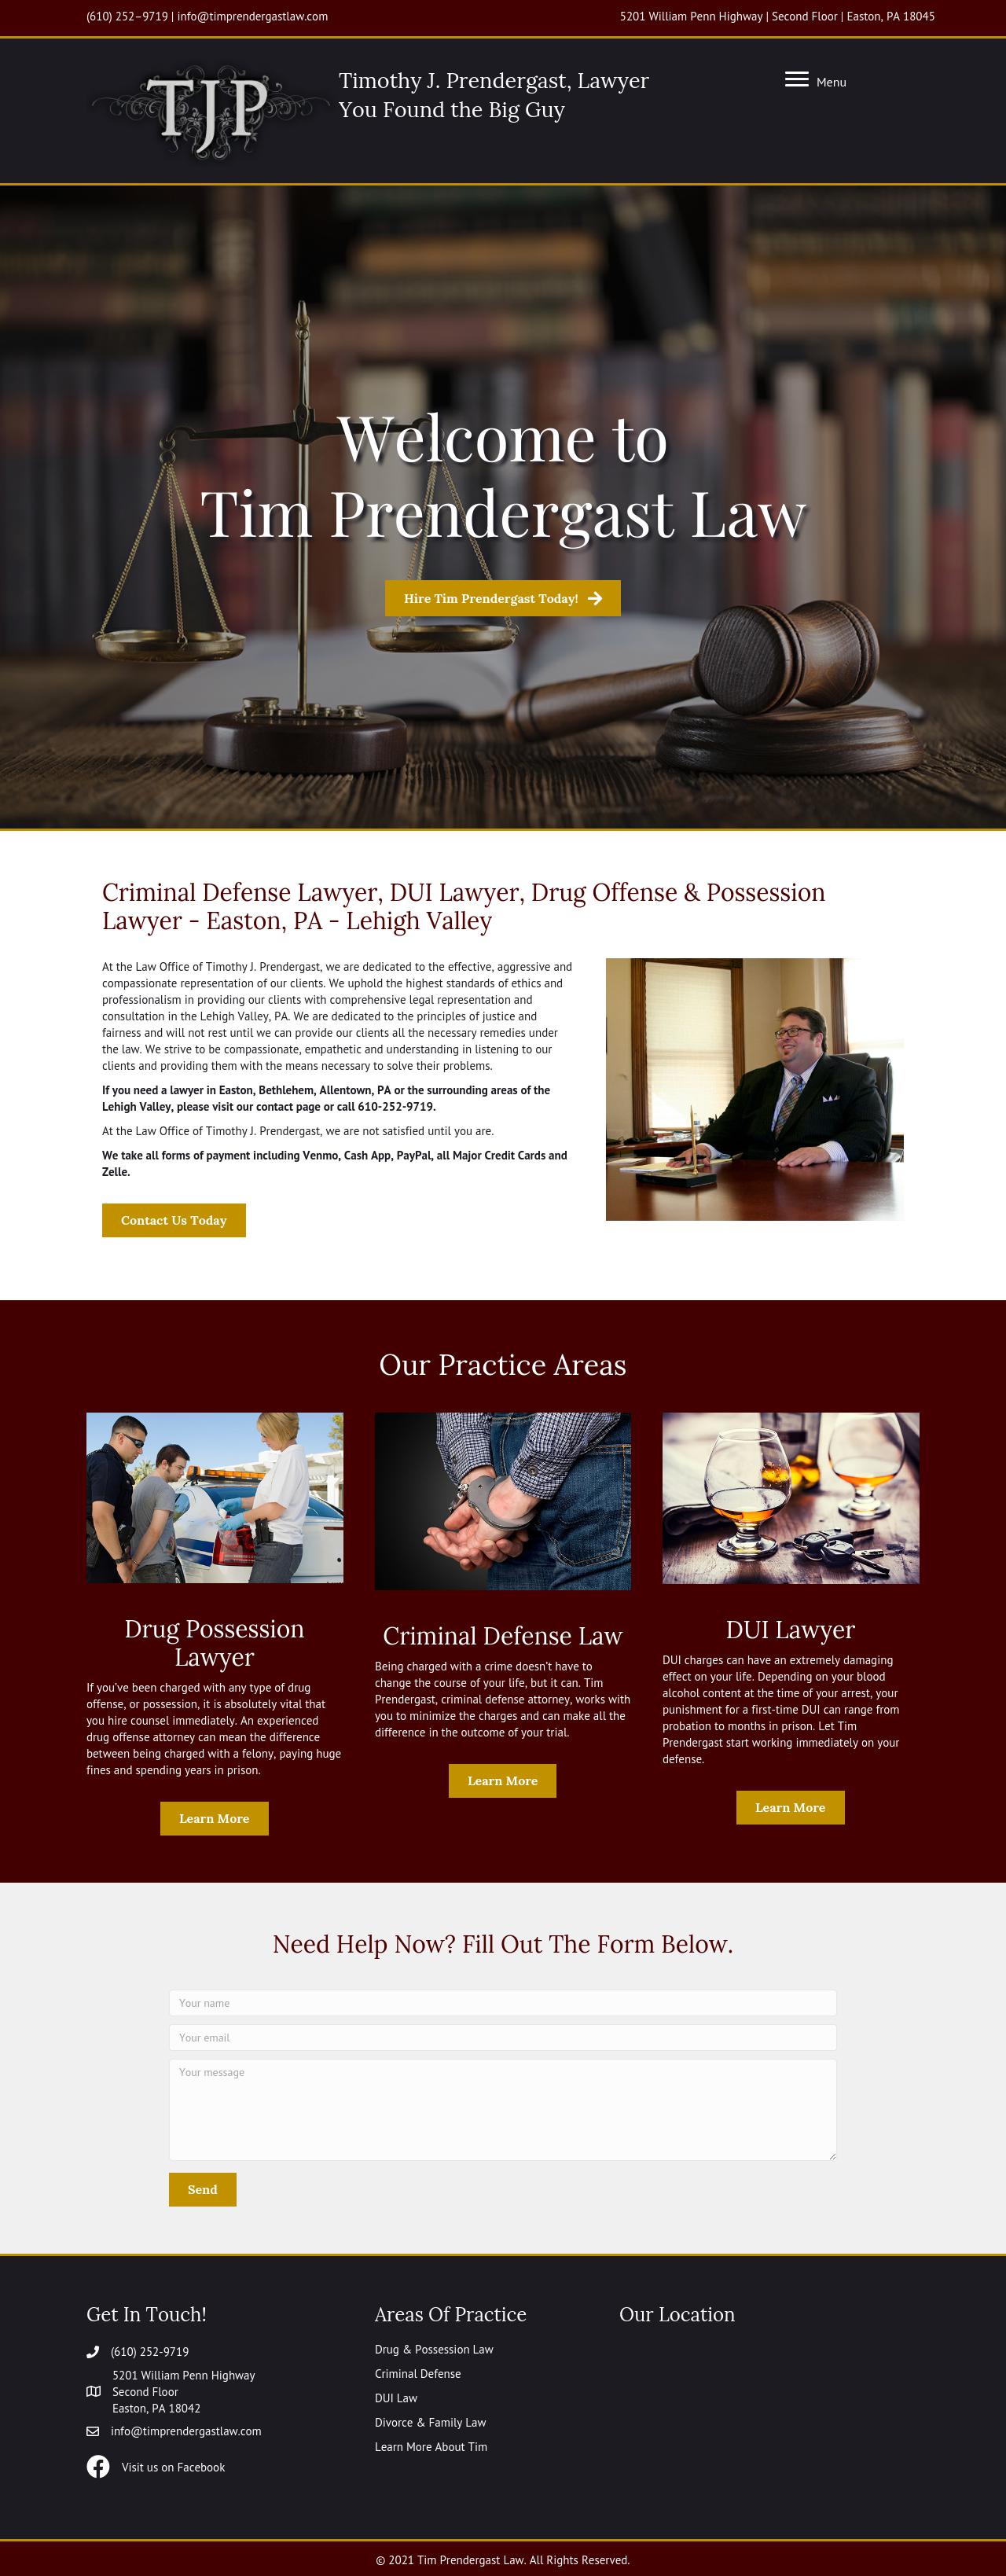 Law Office of Timothy J. Prendergast - Easton PA Lawyers